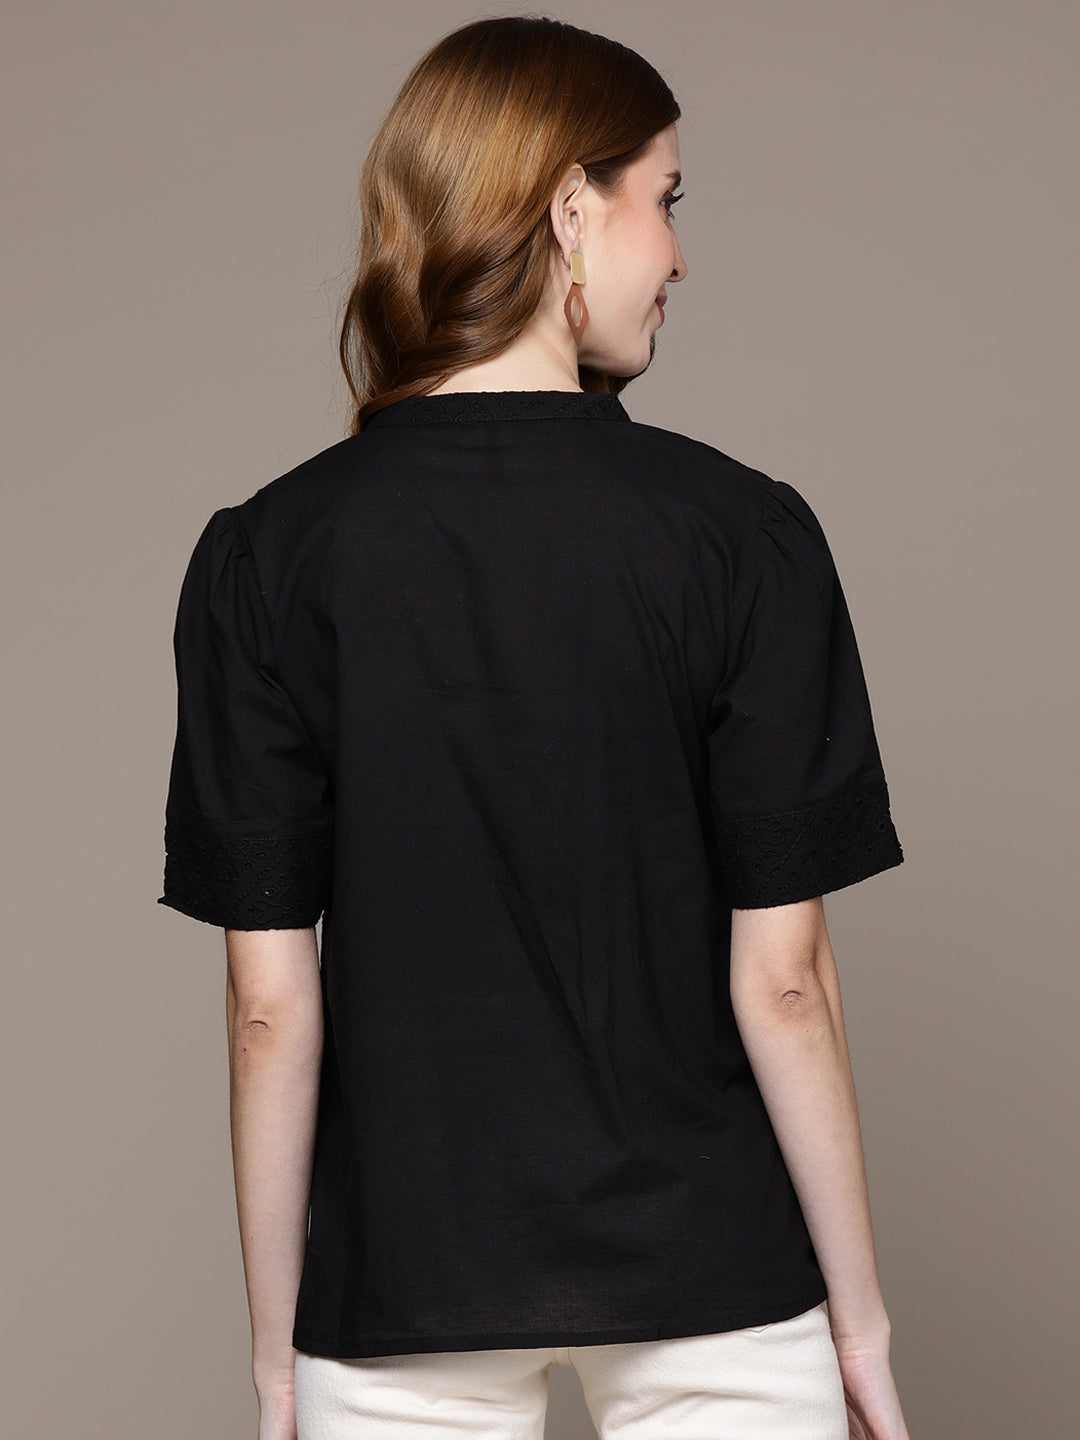 Ishin Women's Black Schiffli Shirt Style Top